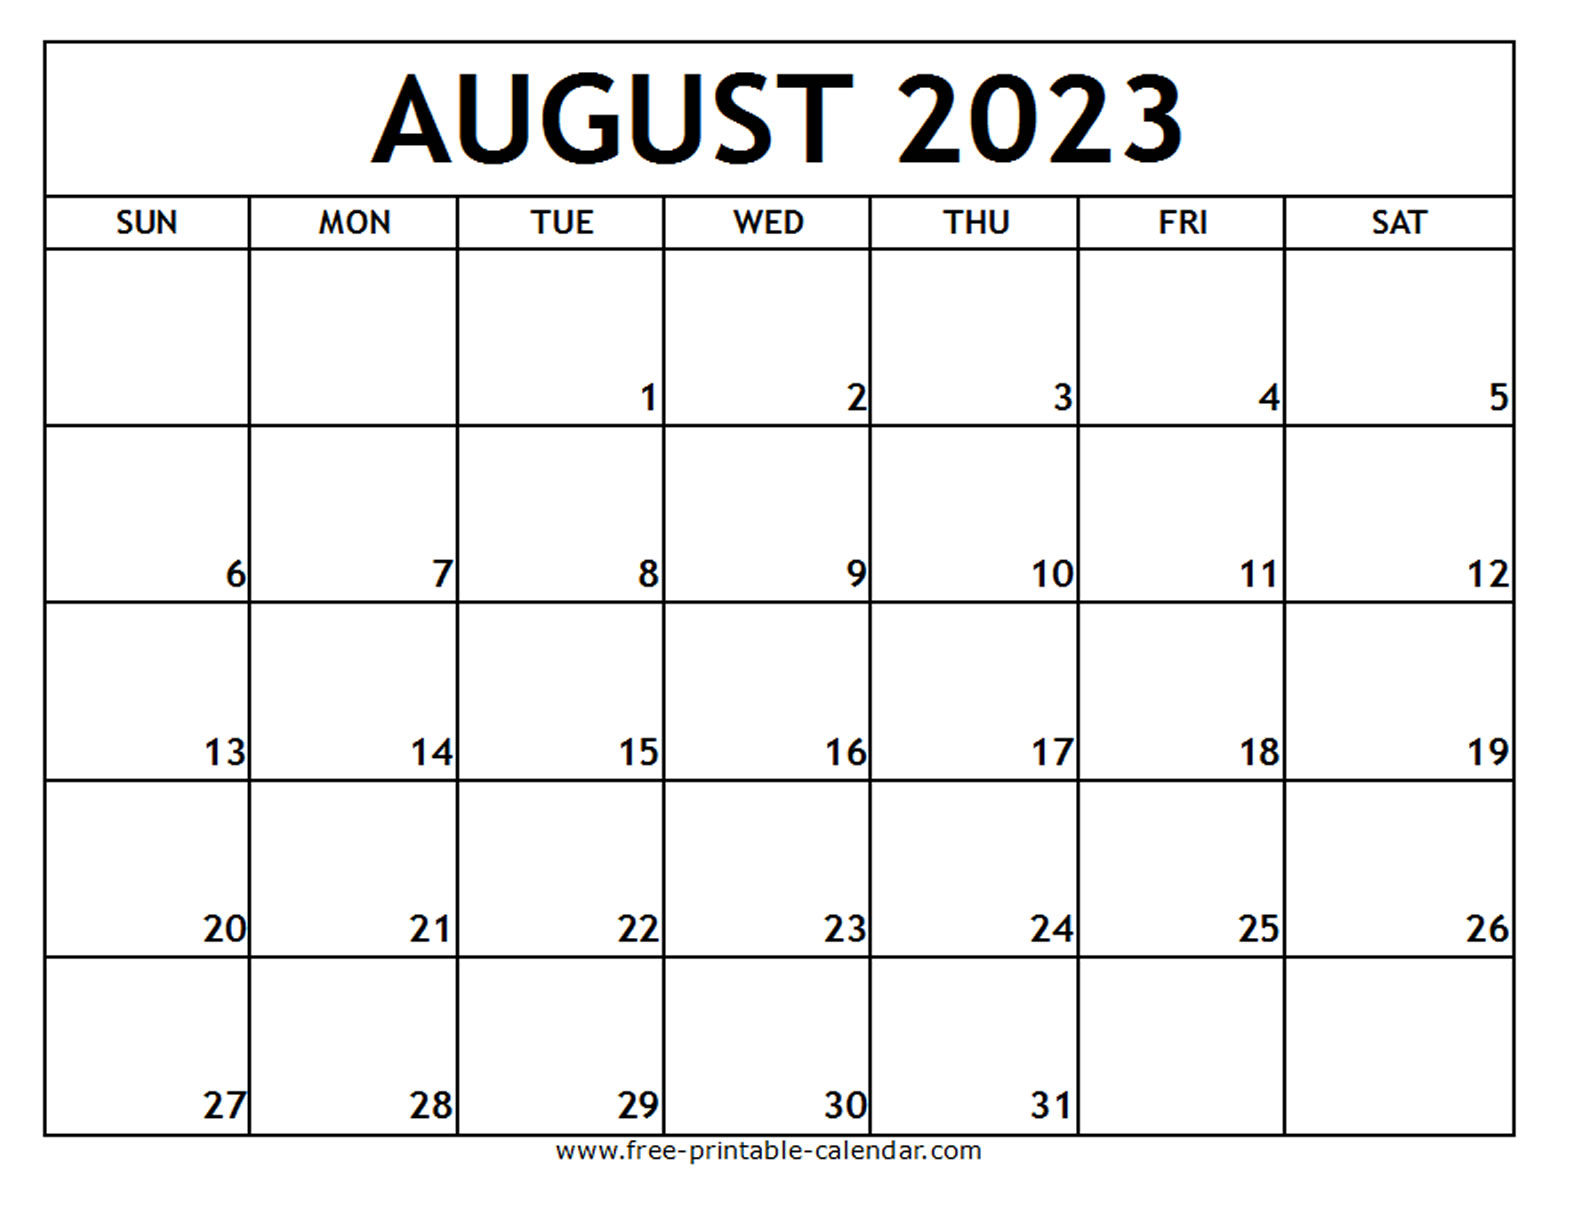 august-2023-monthly-calendar-printable-free-pdf-pelajaran